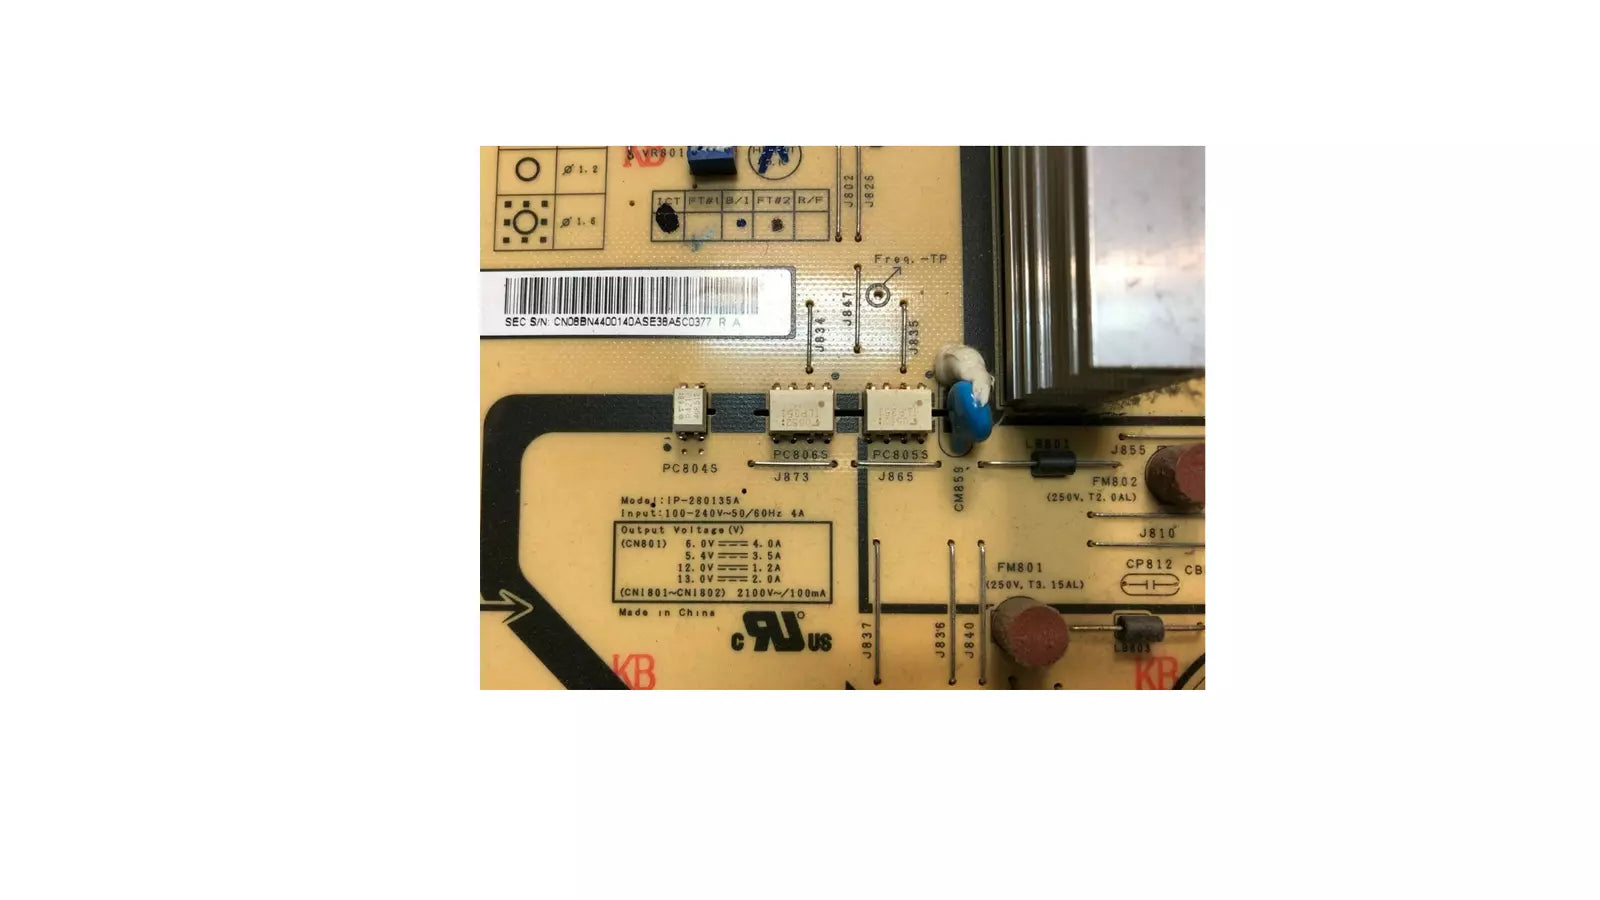 Samsung power supply IP-280135A